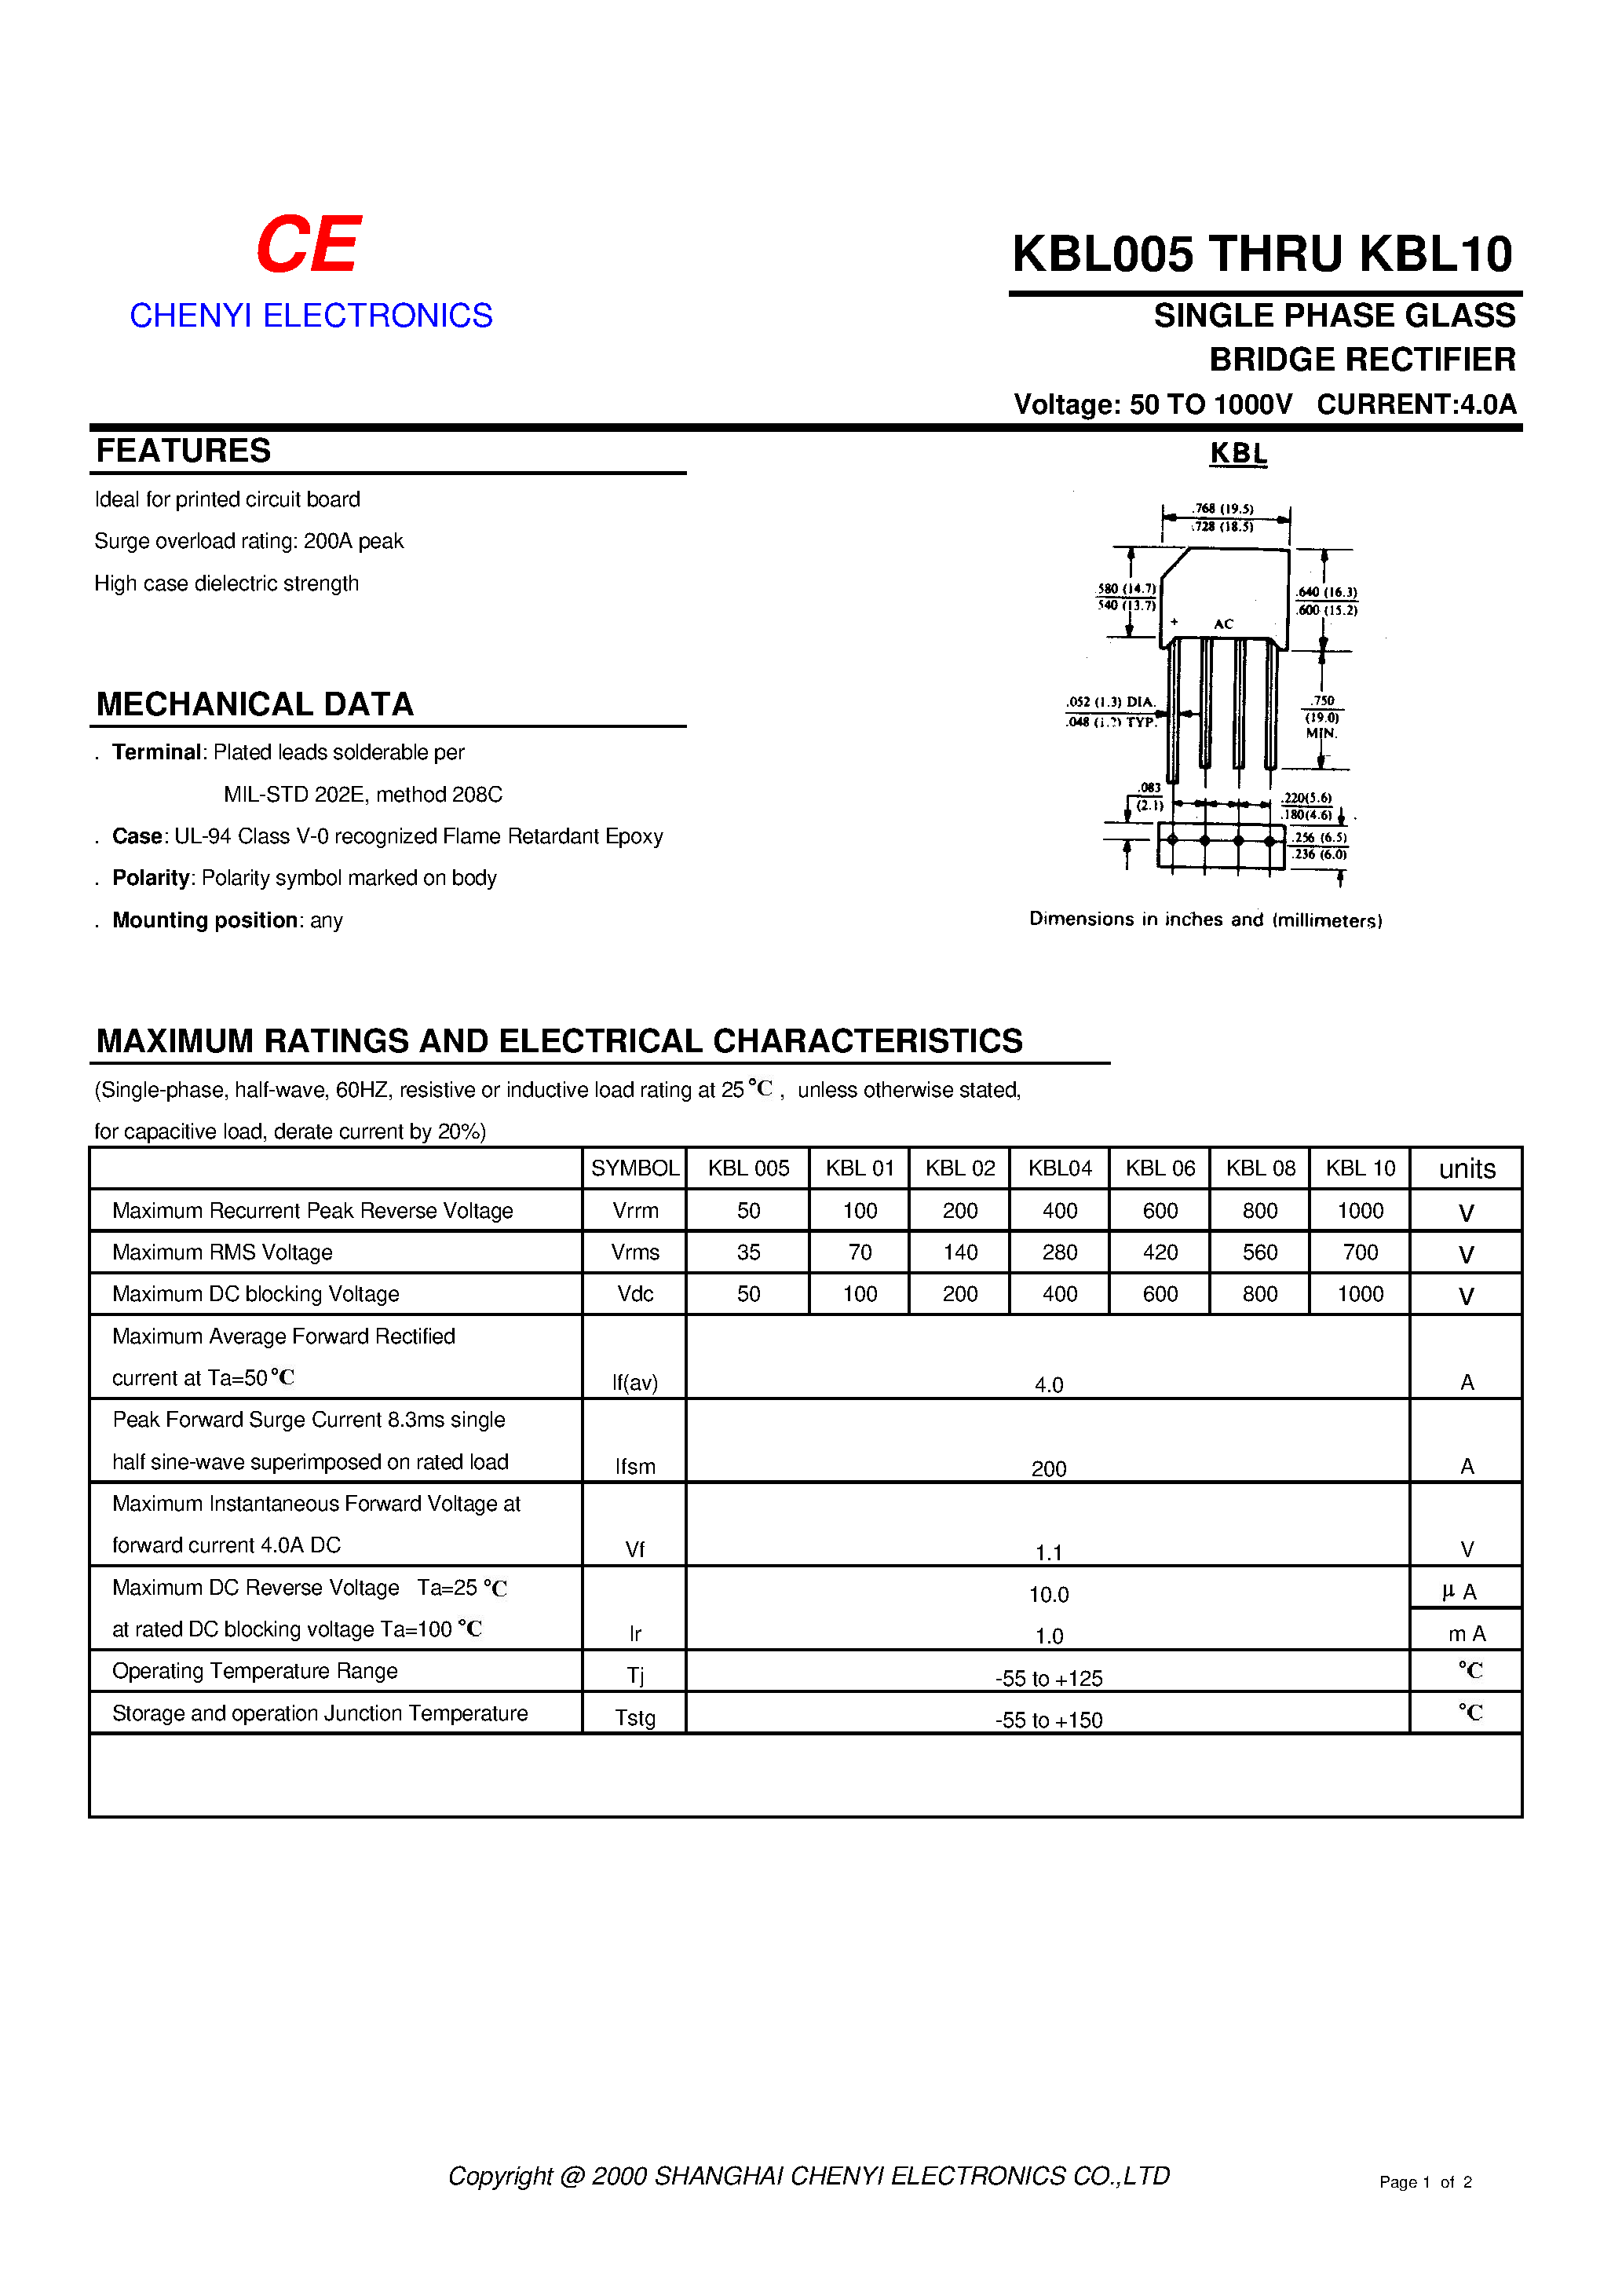 Datasheet KBL01 - SINGLE PHASE GLASS BRIDGE RECTIFIER page 1